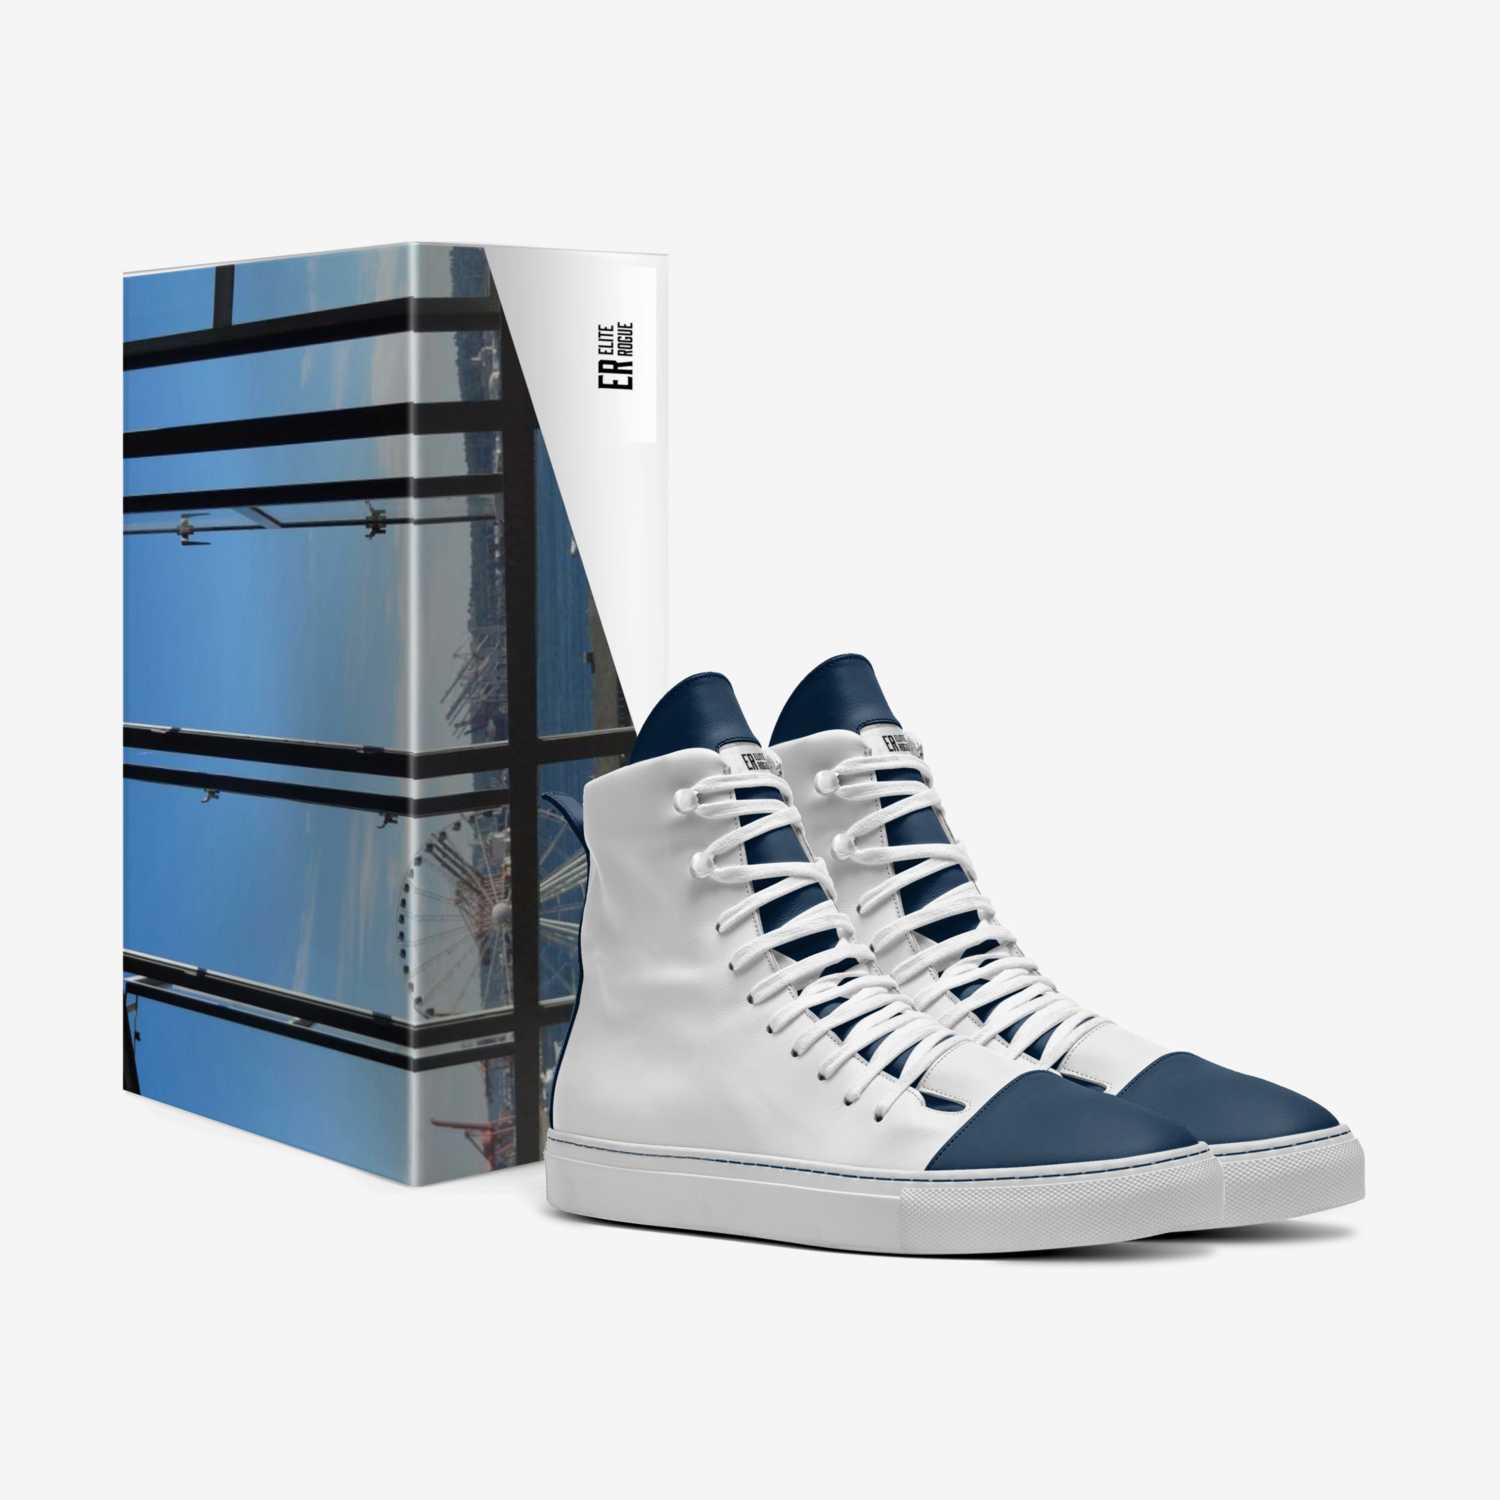 Sky Walking custom made in Italy shoes by Tanya-lynn Faupula | Box view